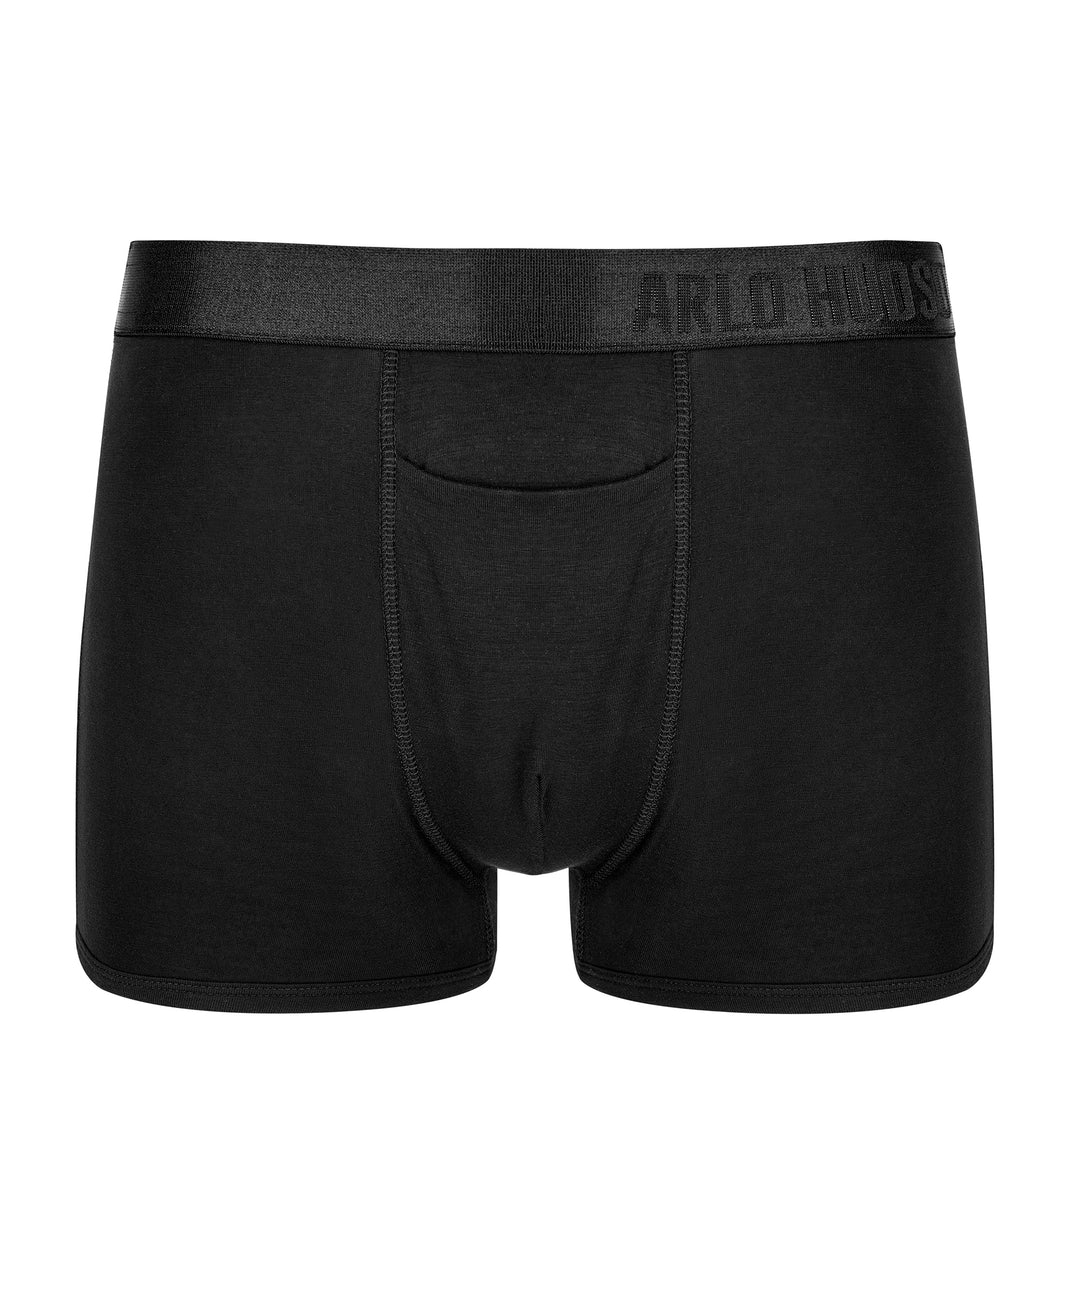 ARLO HUDSON. - Underwear Done Properly.